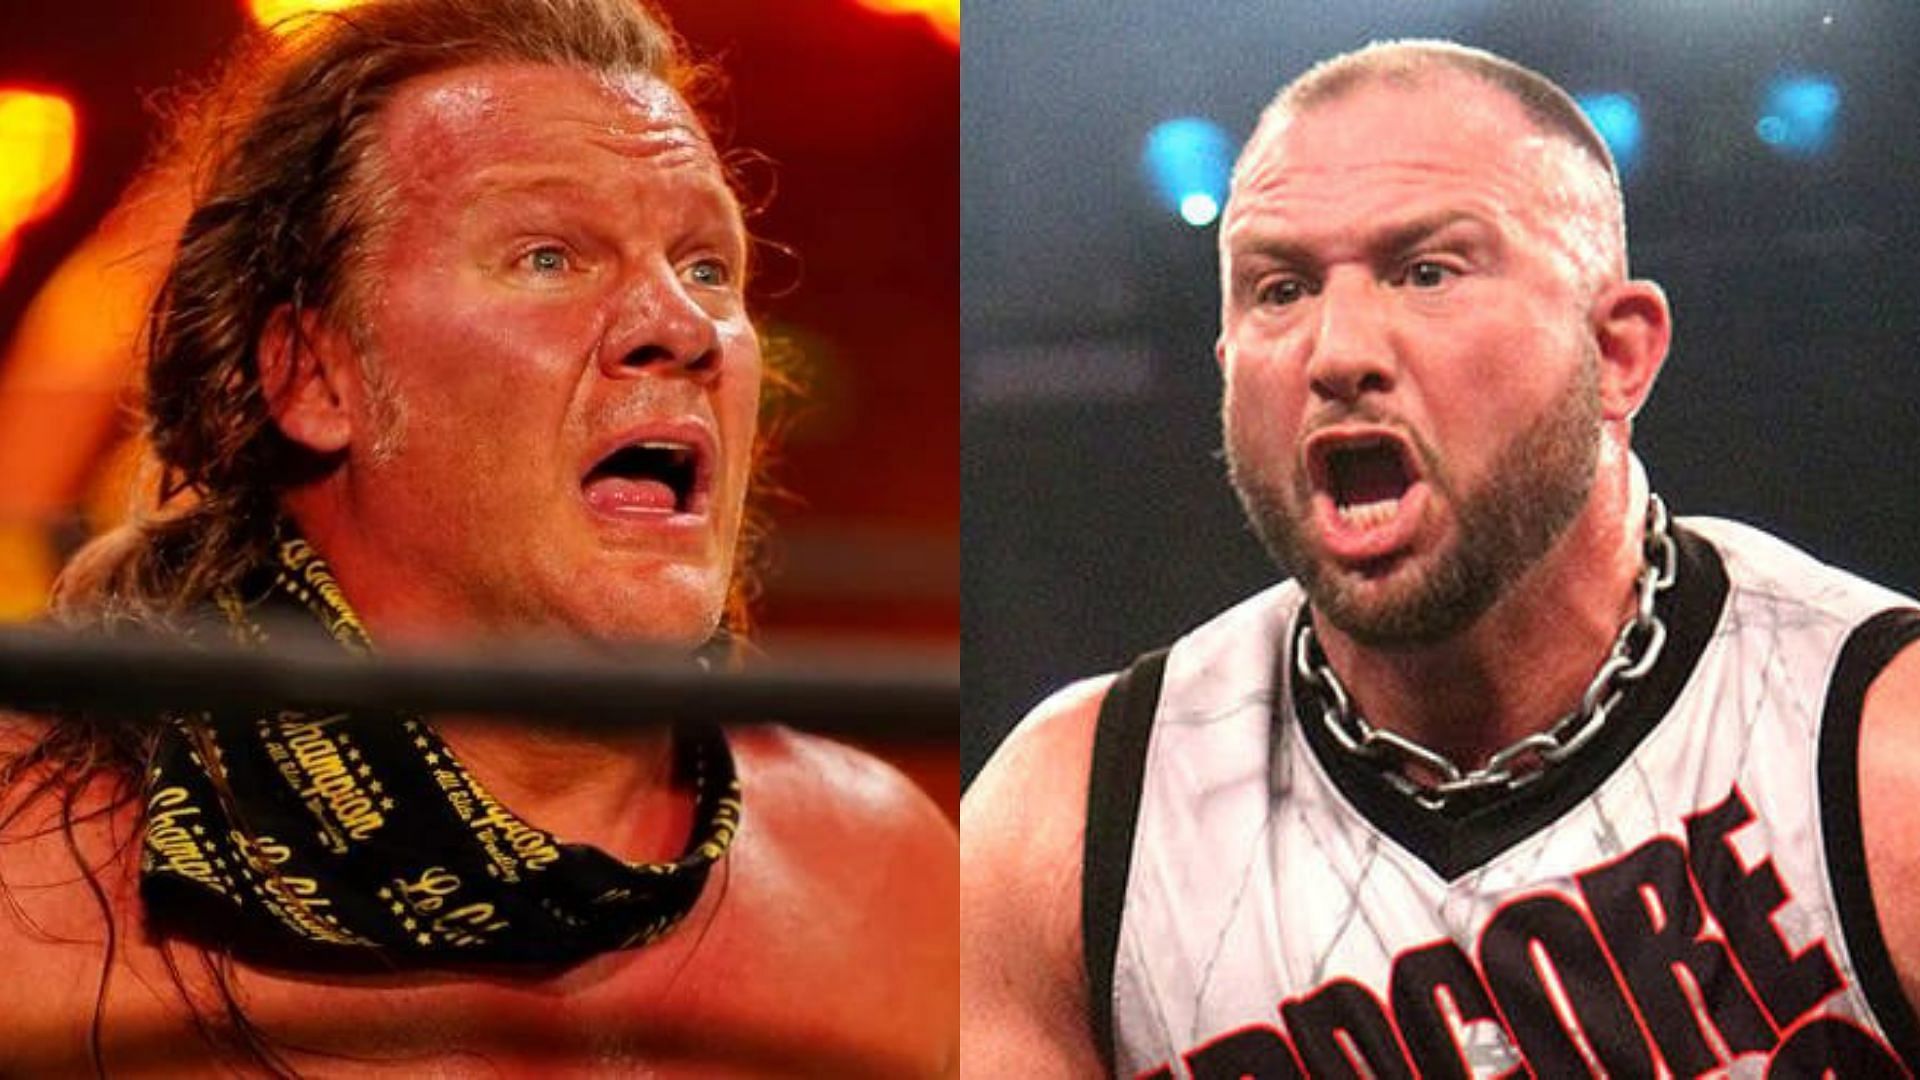 Bully Ray (right) has reacted to Chris Jericho